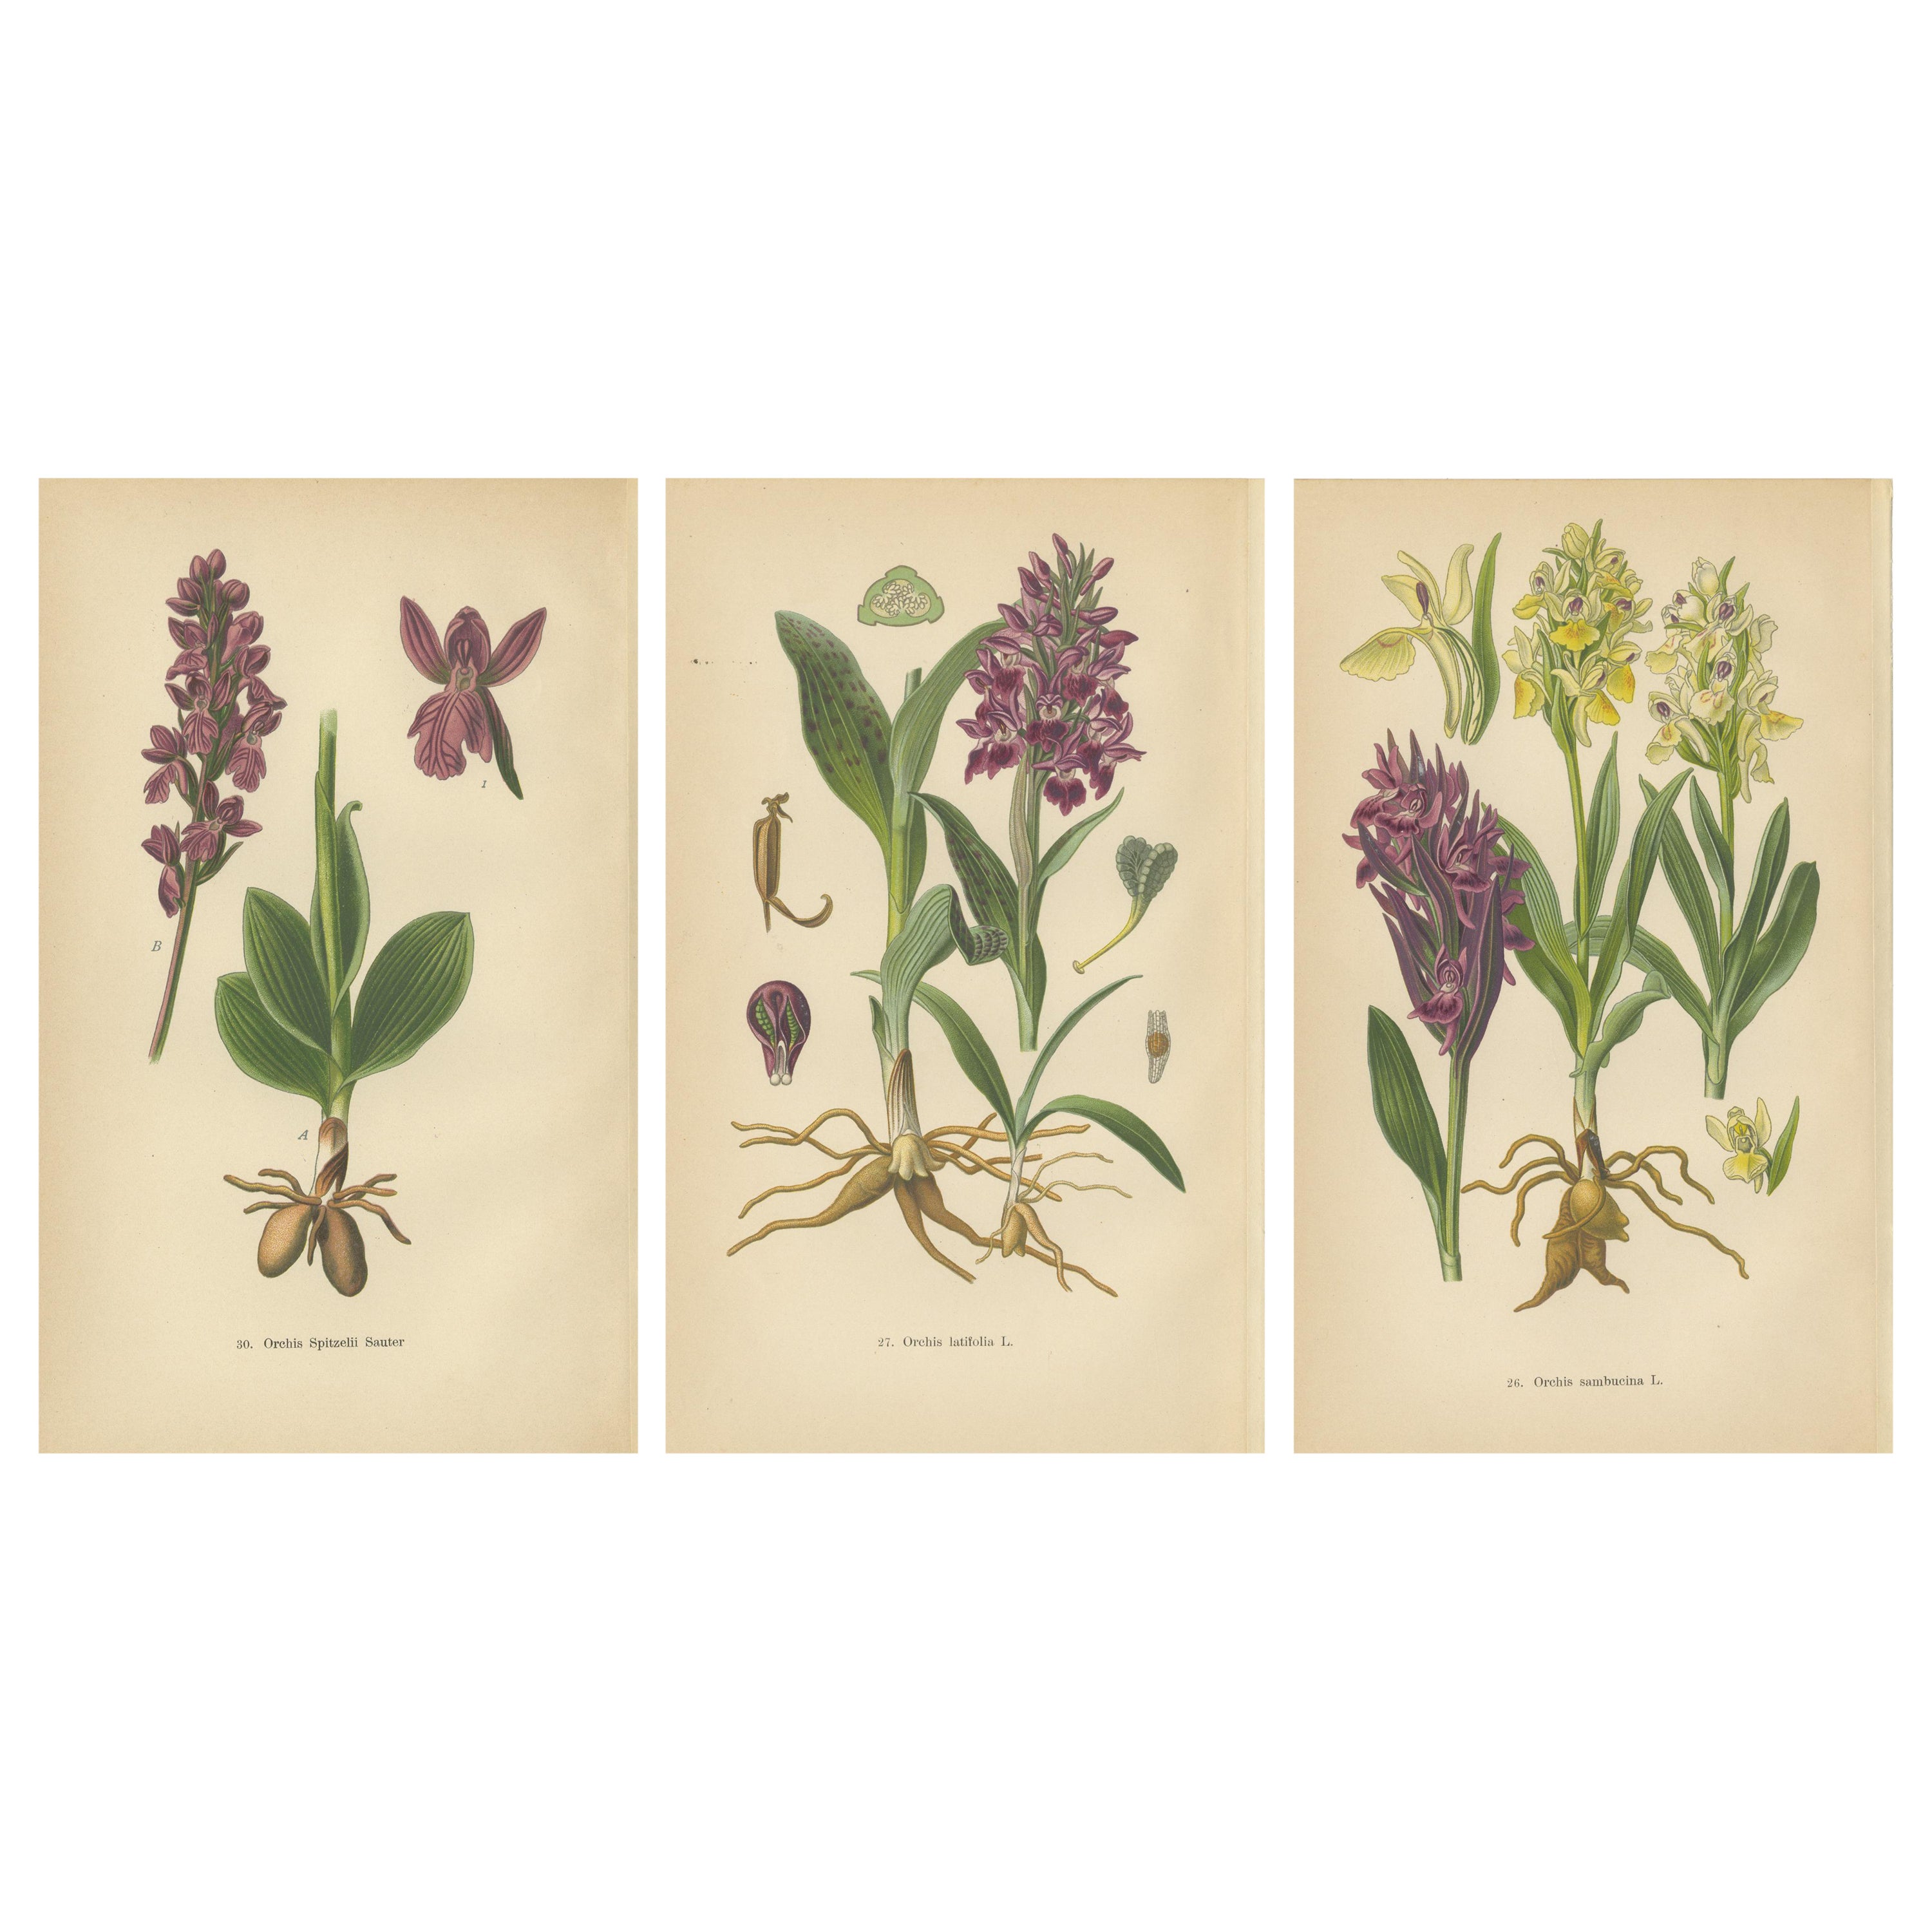 Varieties of Elegance: Portraits of Orchids in 1904 Botanical Study, botanische Studie